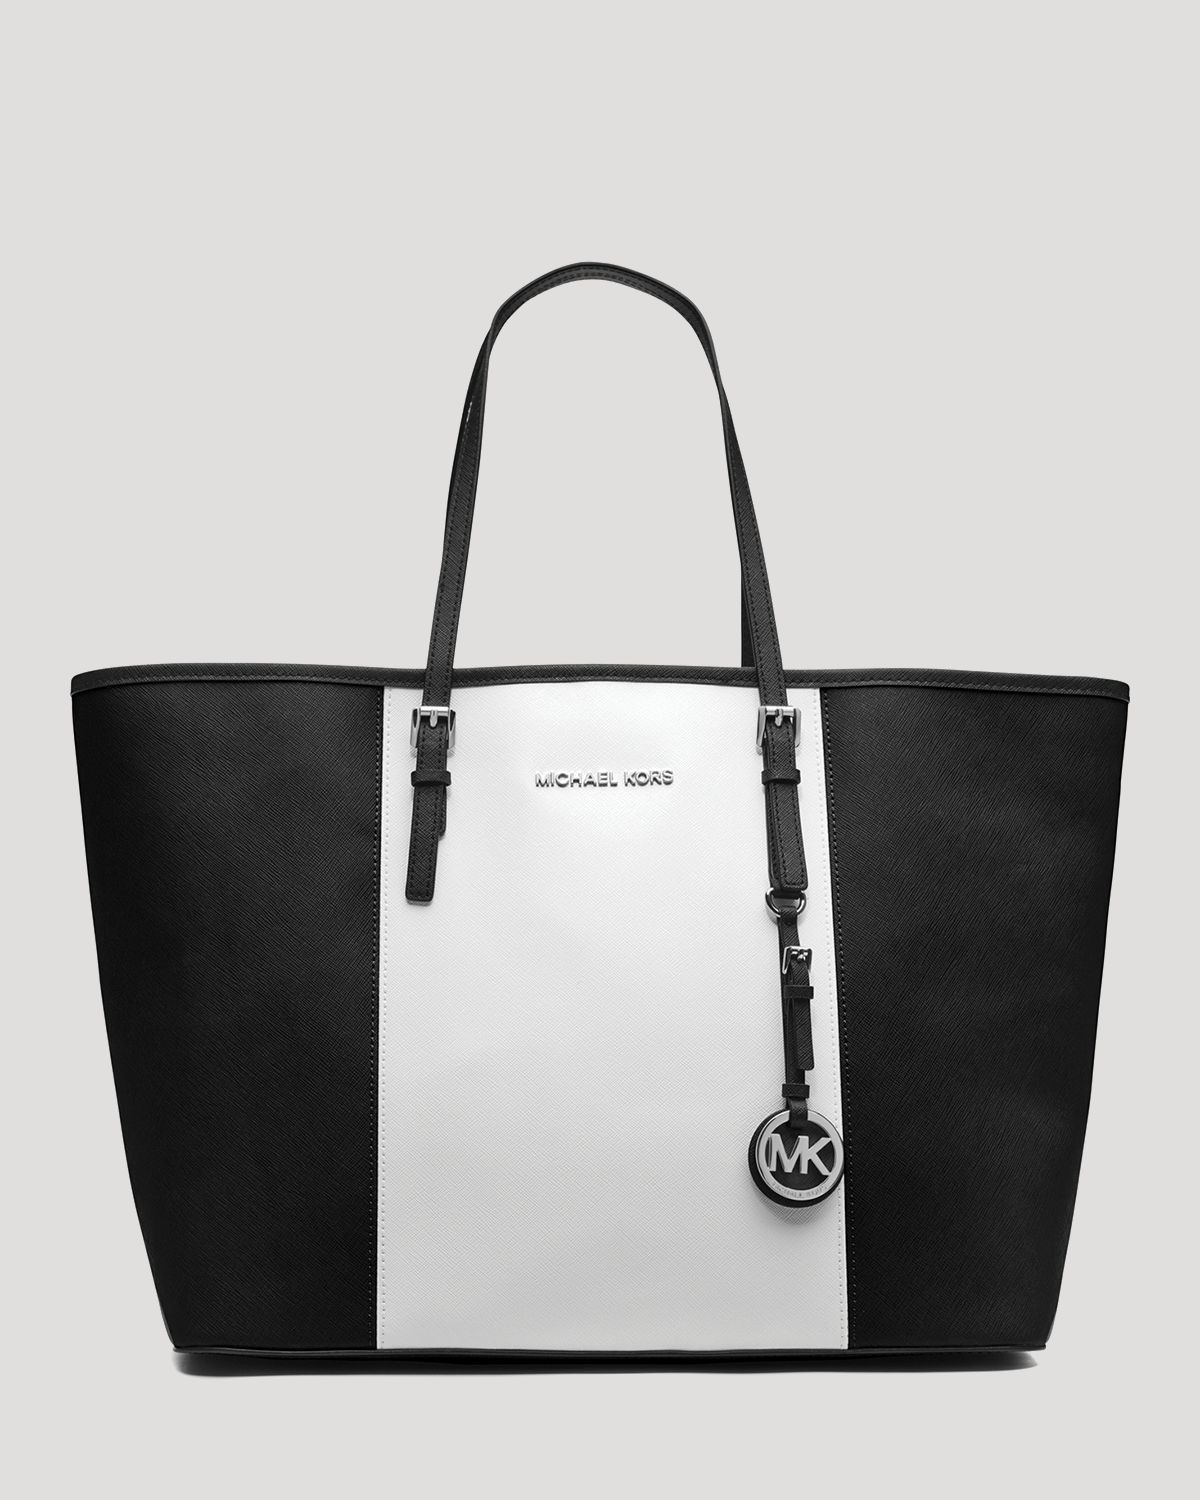 michael kors handbags black and white